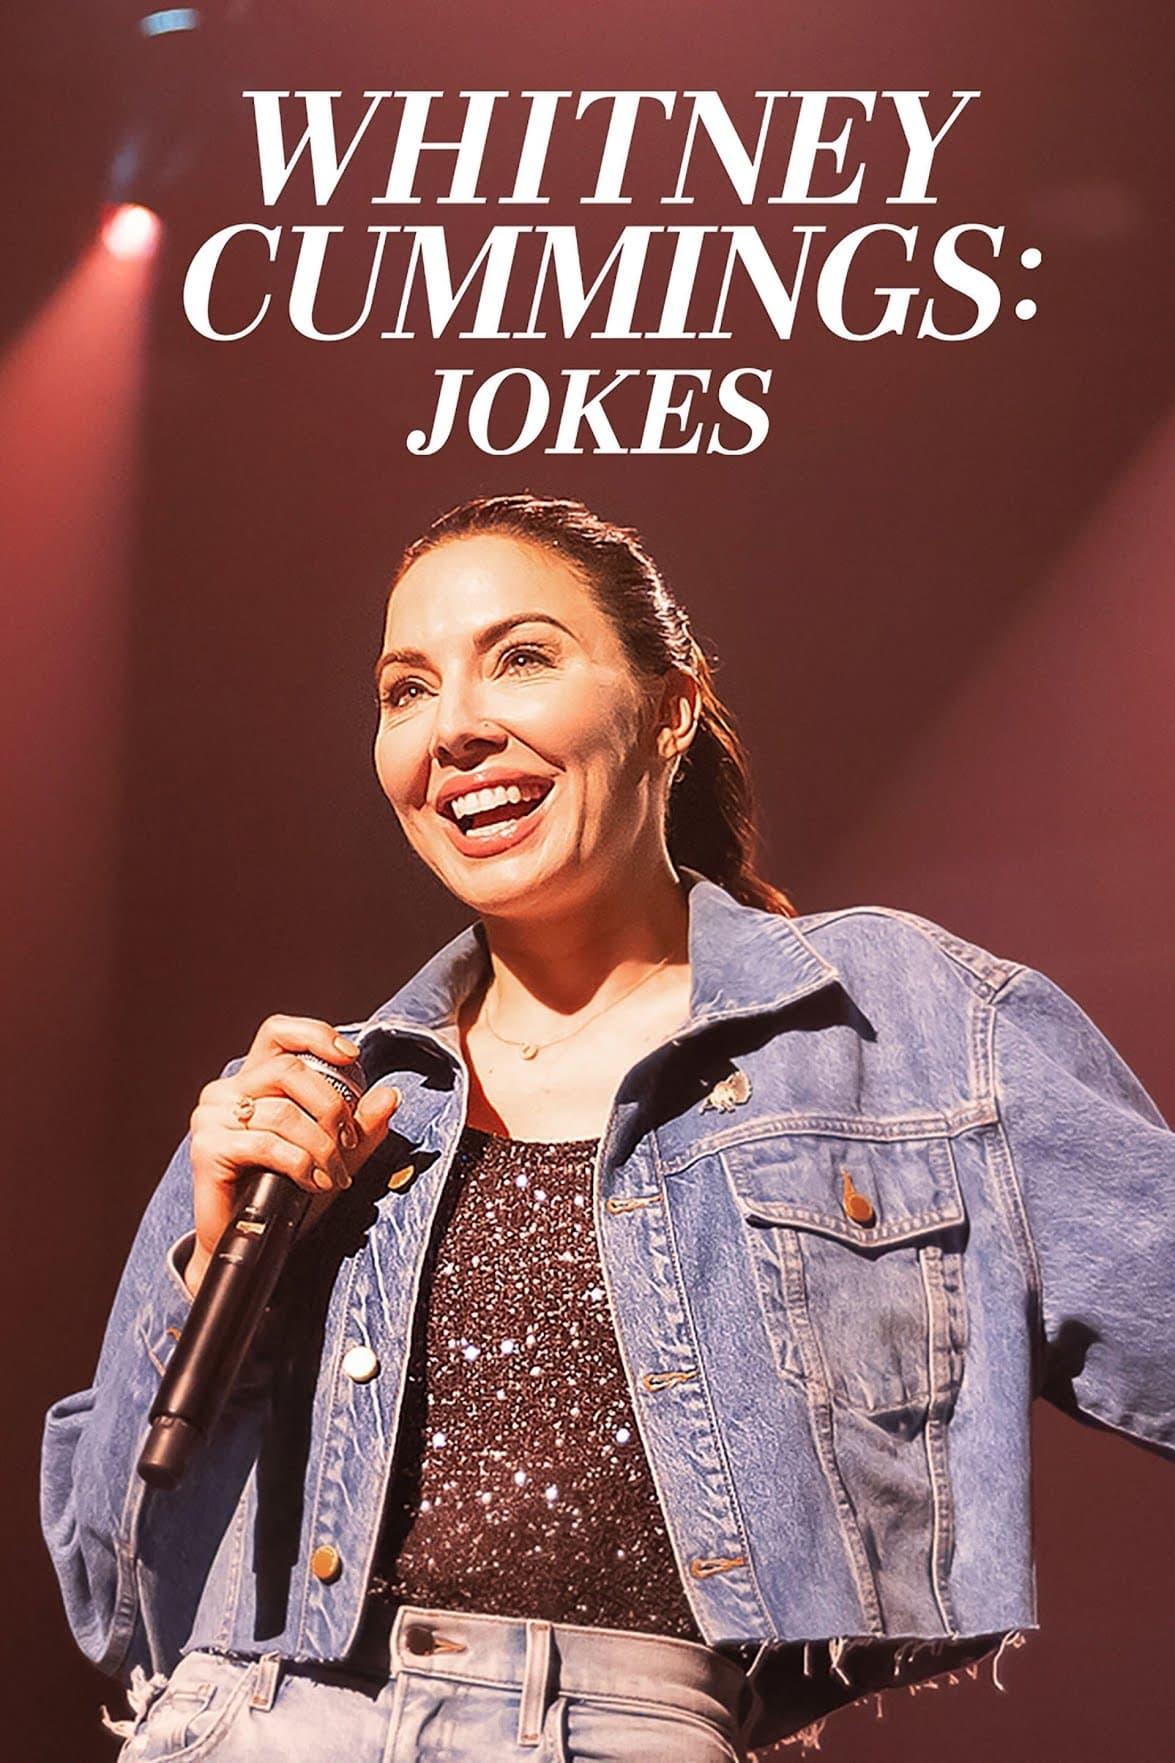 Whitney Cummings: Jokes poster